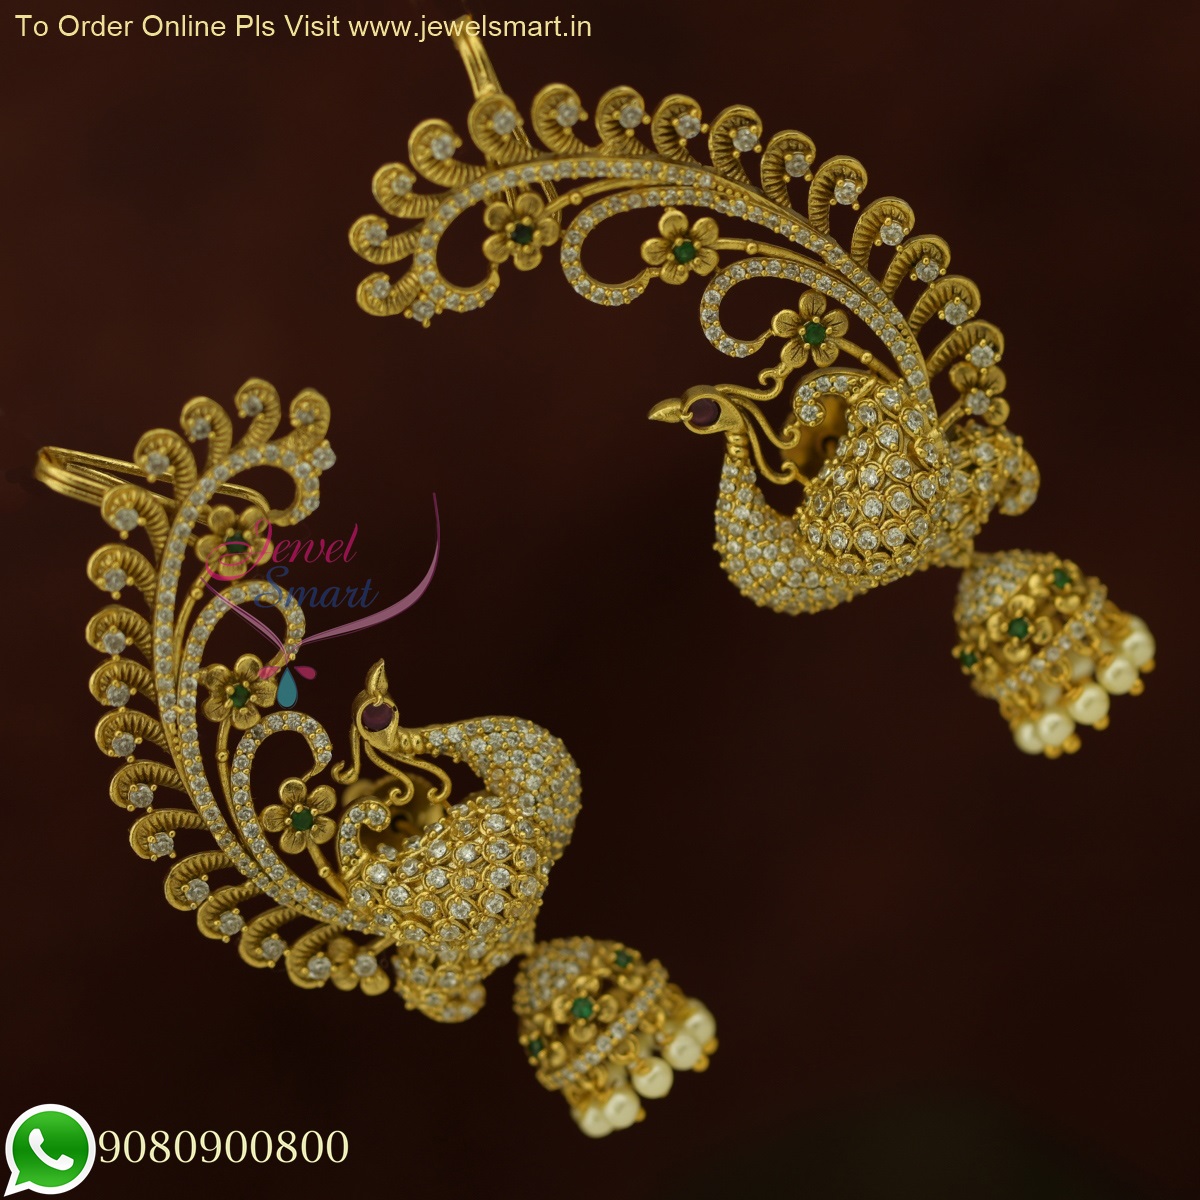 Riana Gold Polished Black Stone Leaf Earrings - Laura Designs (India)